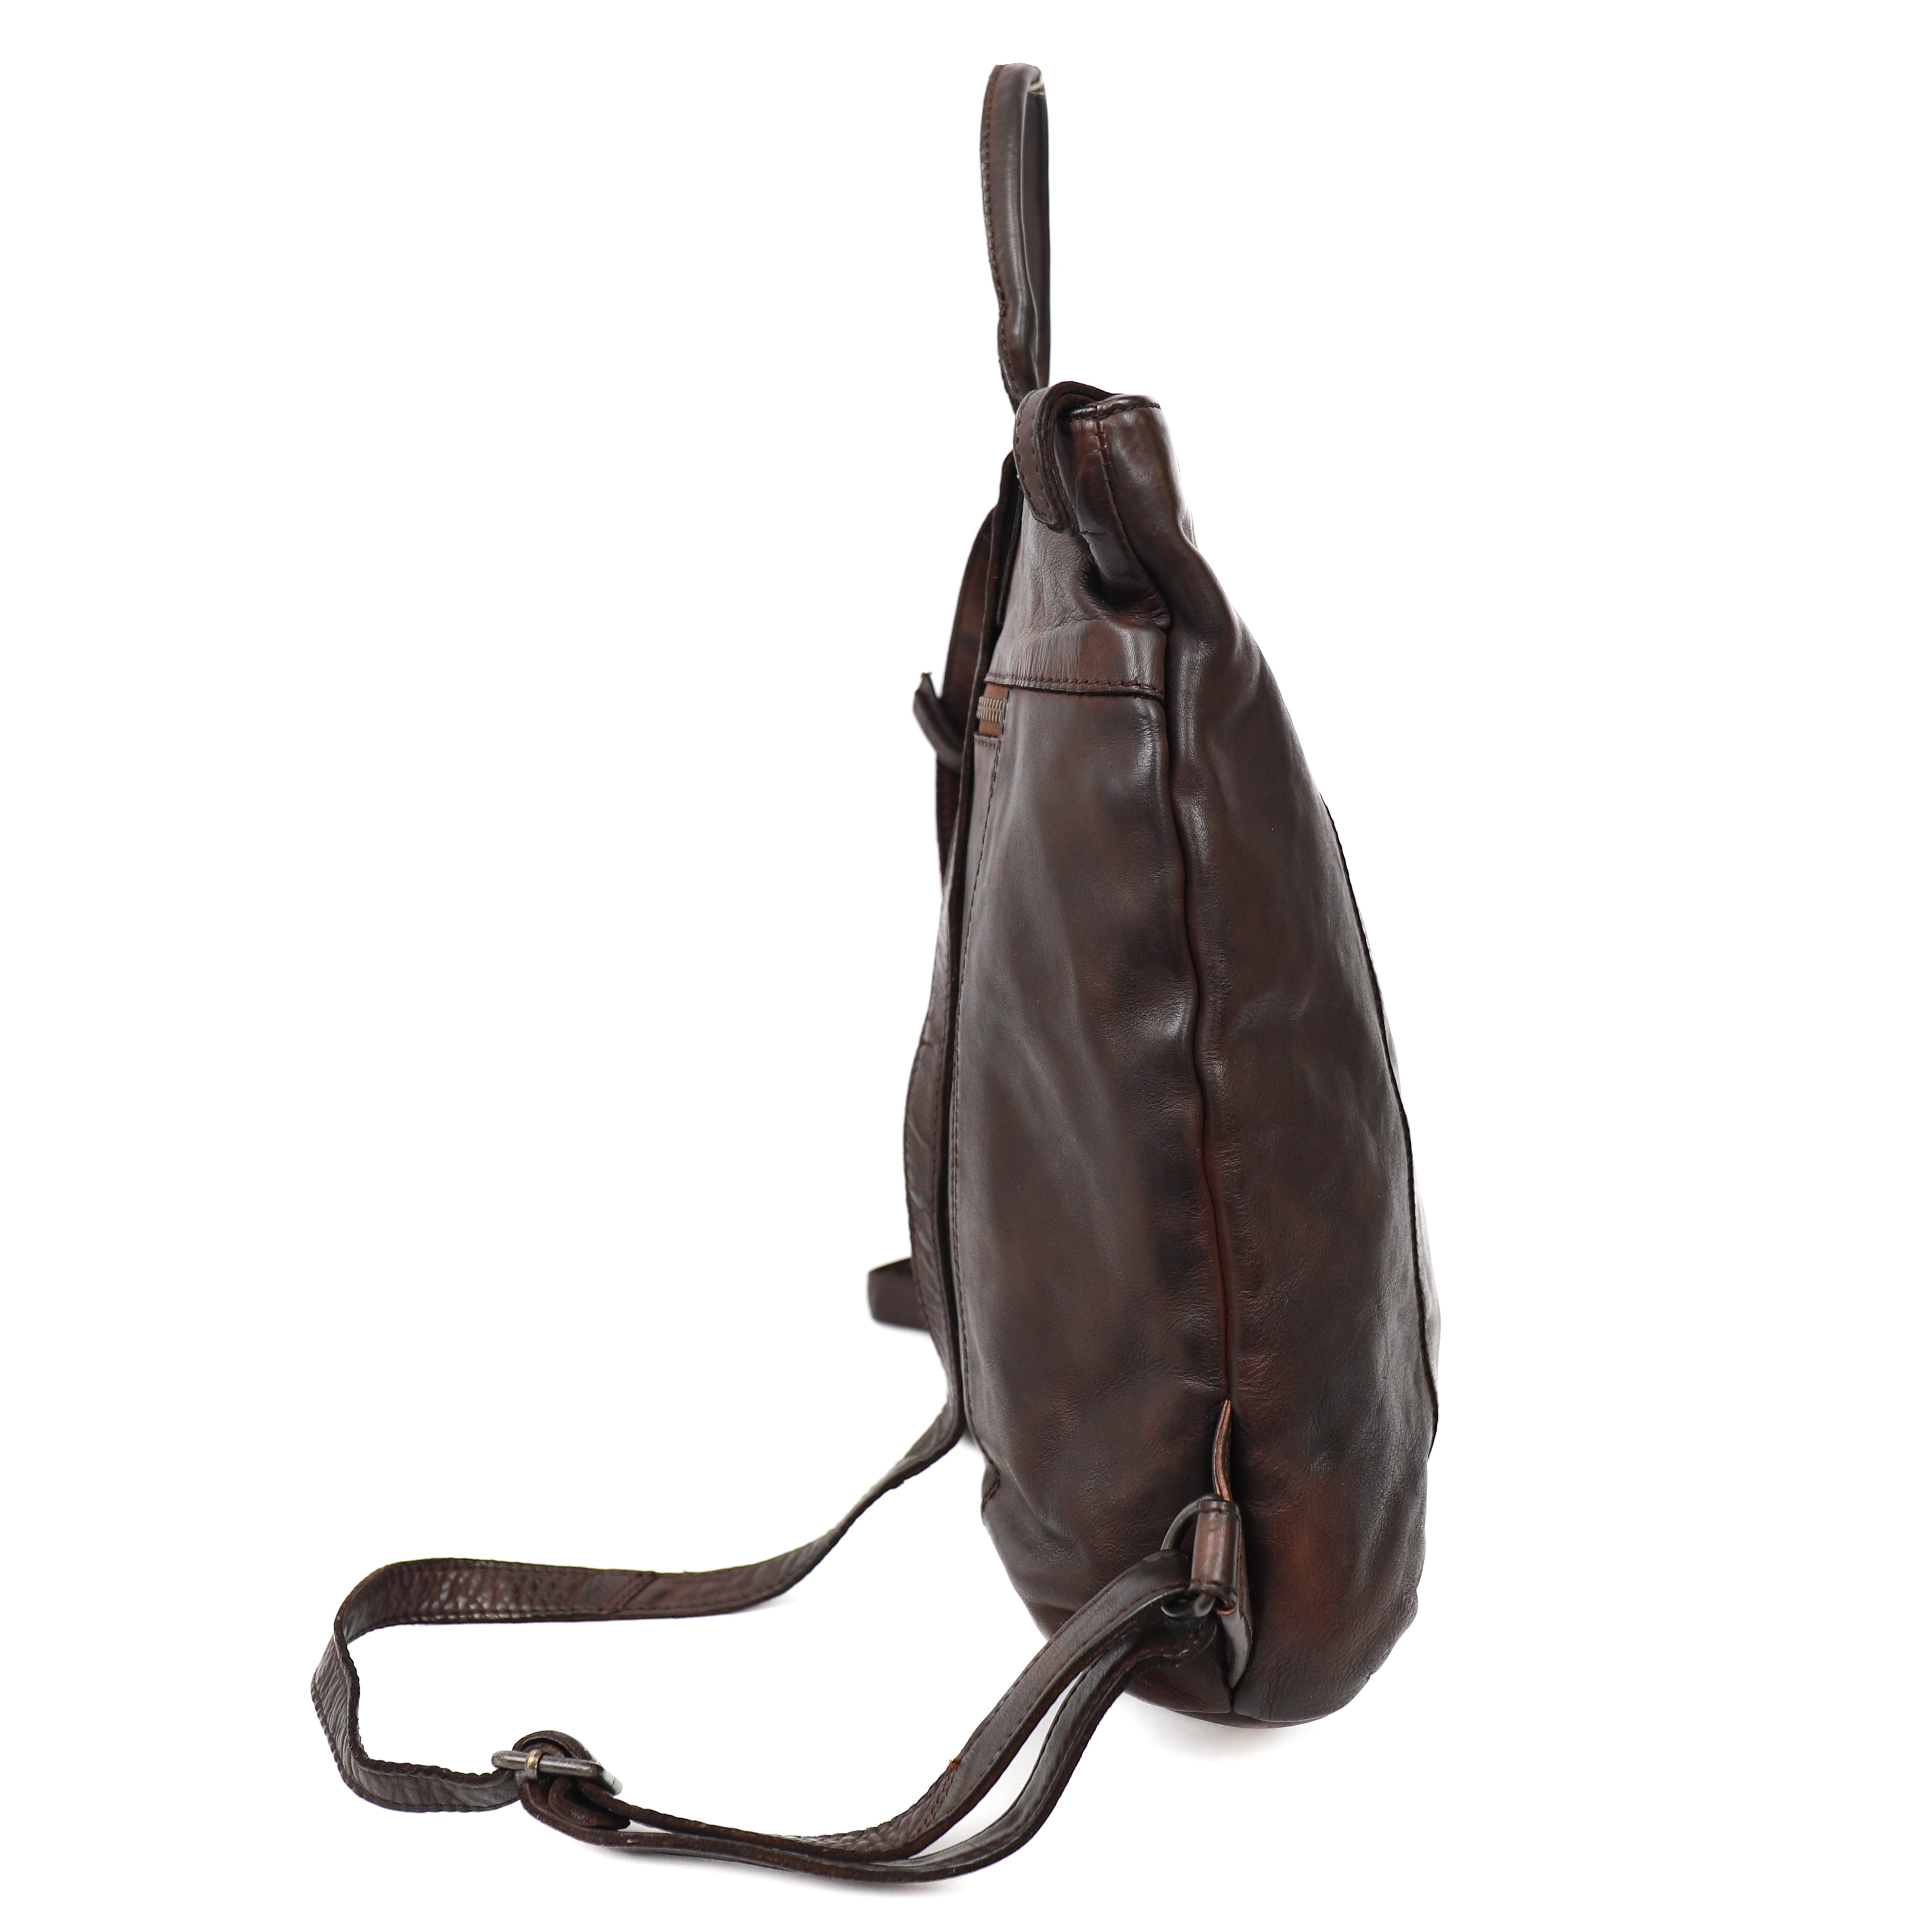 Backpack 'Maxime' dark brown